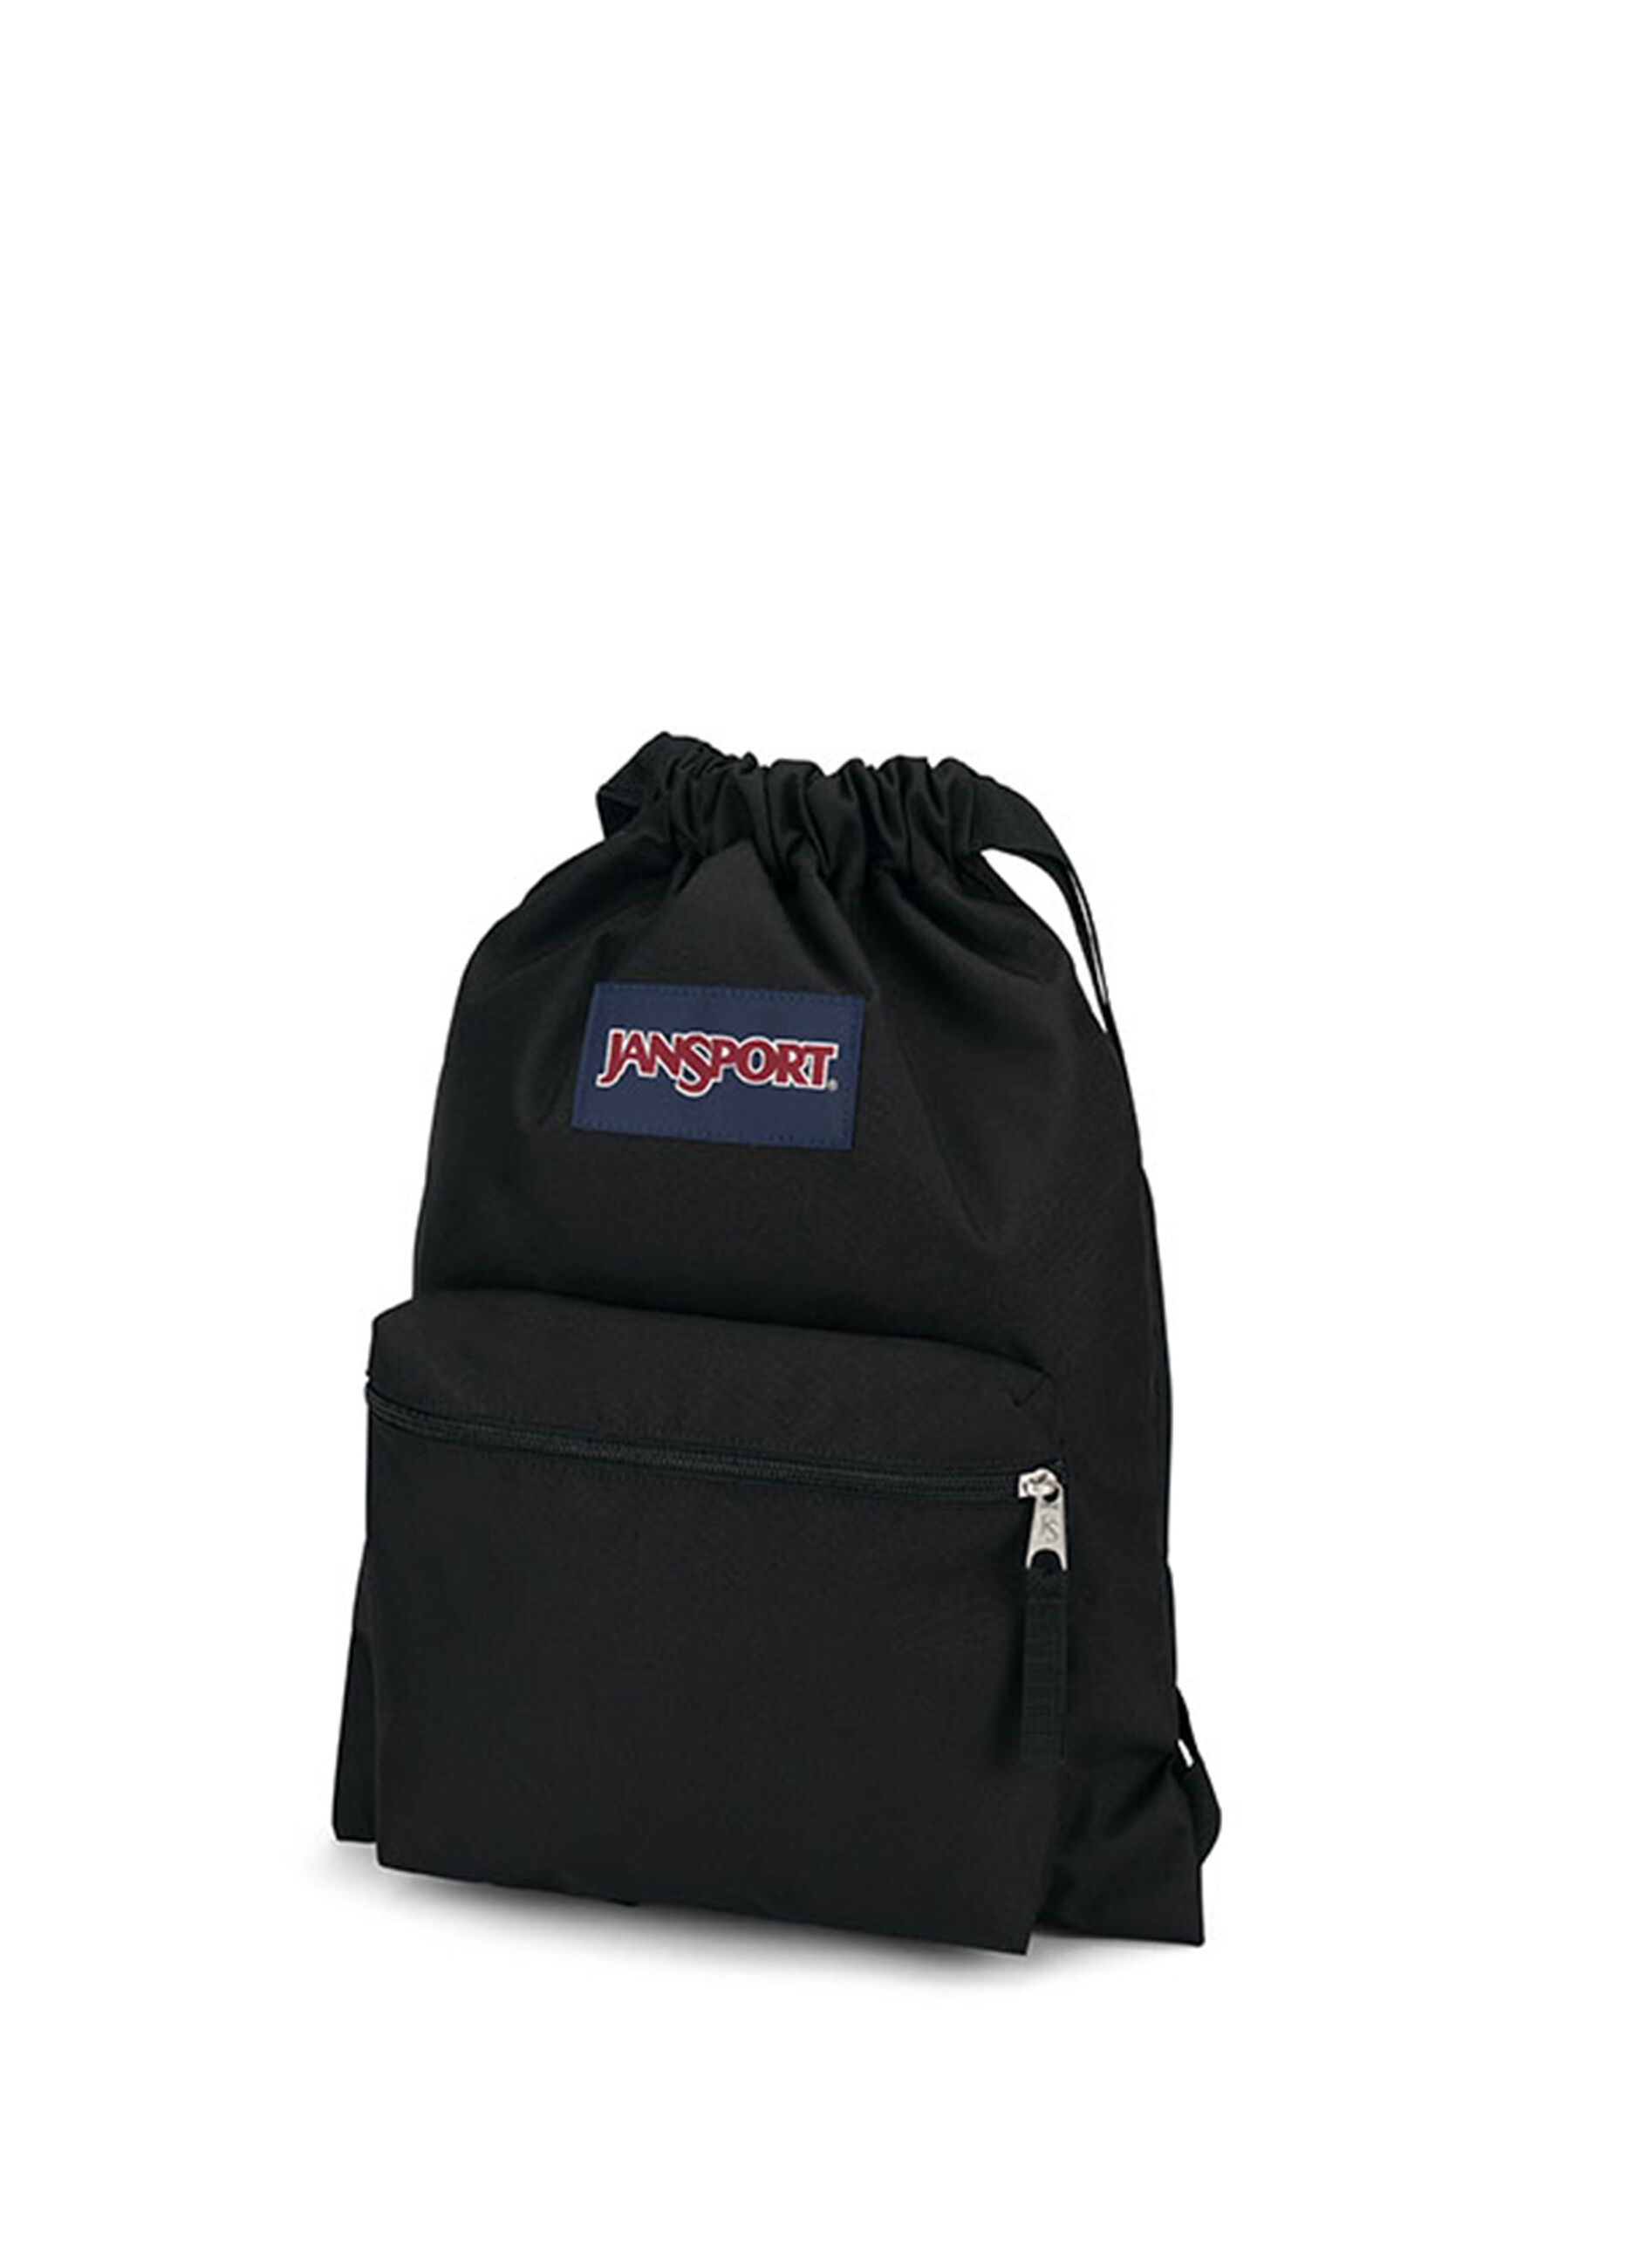 Draw sack backpack